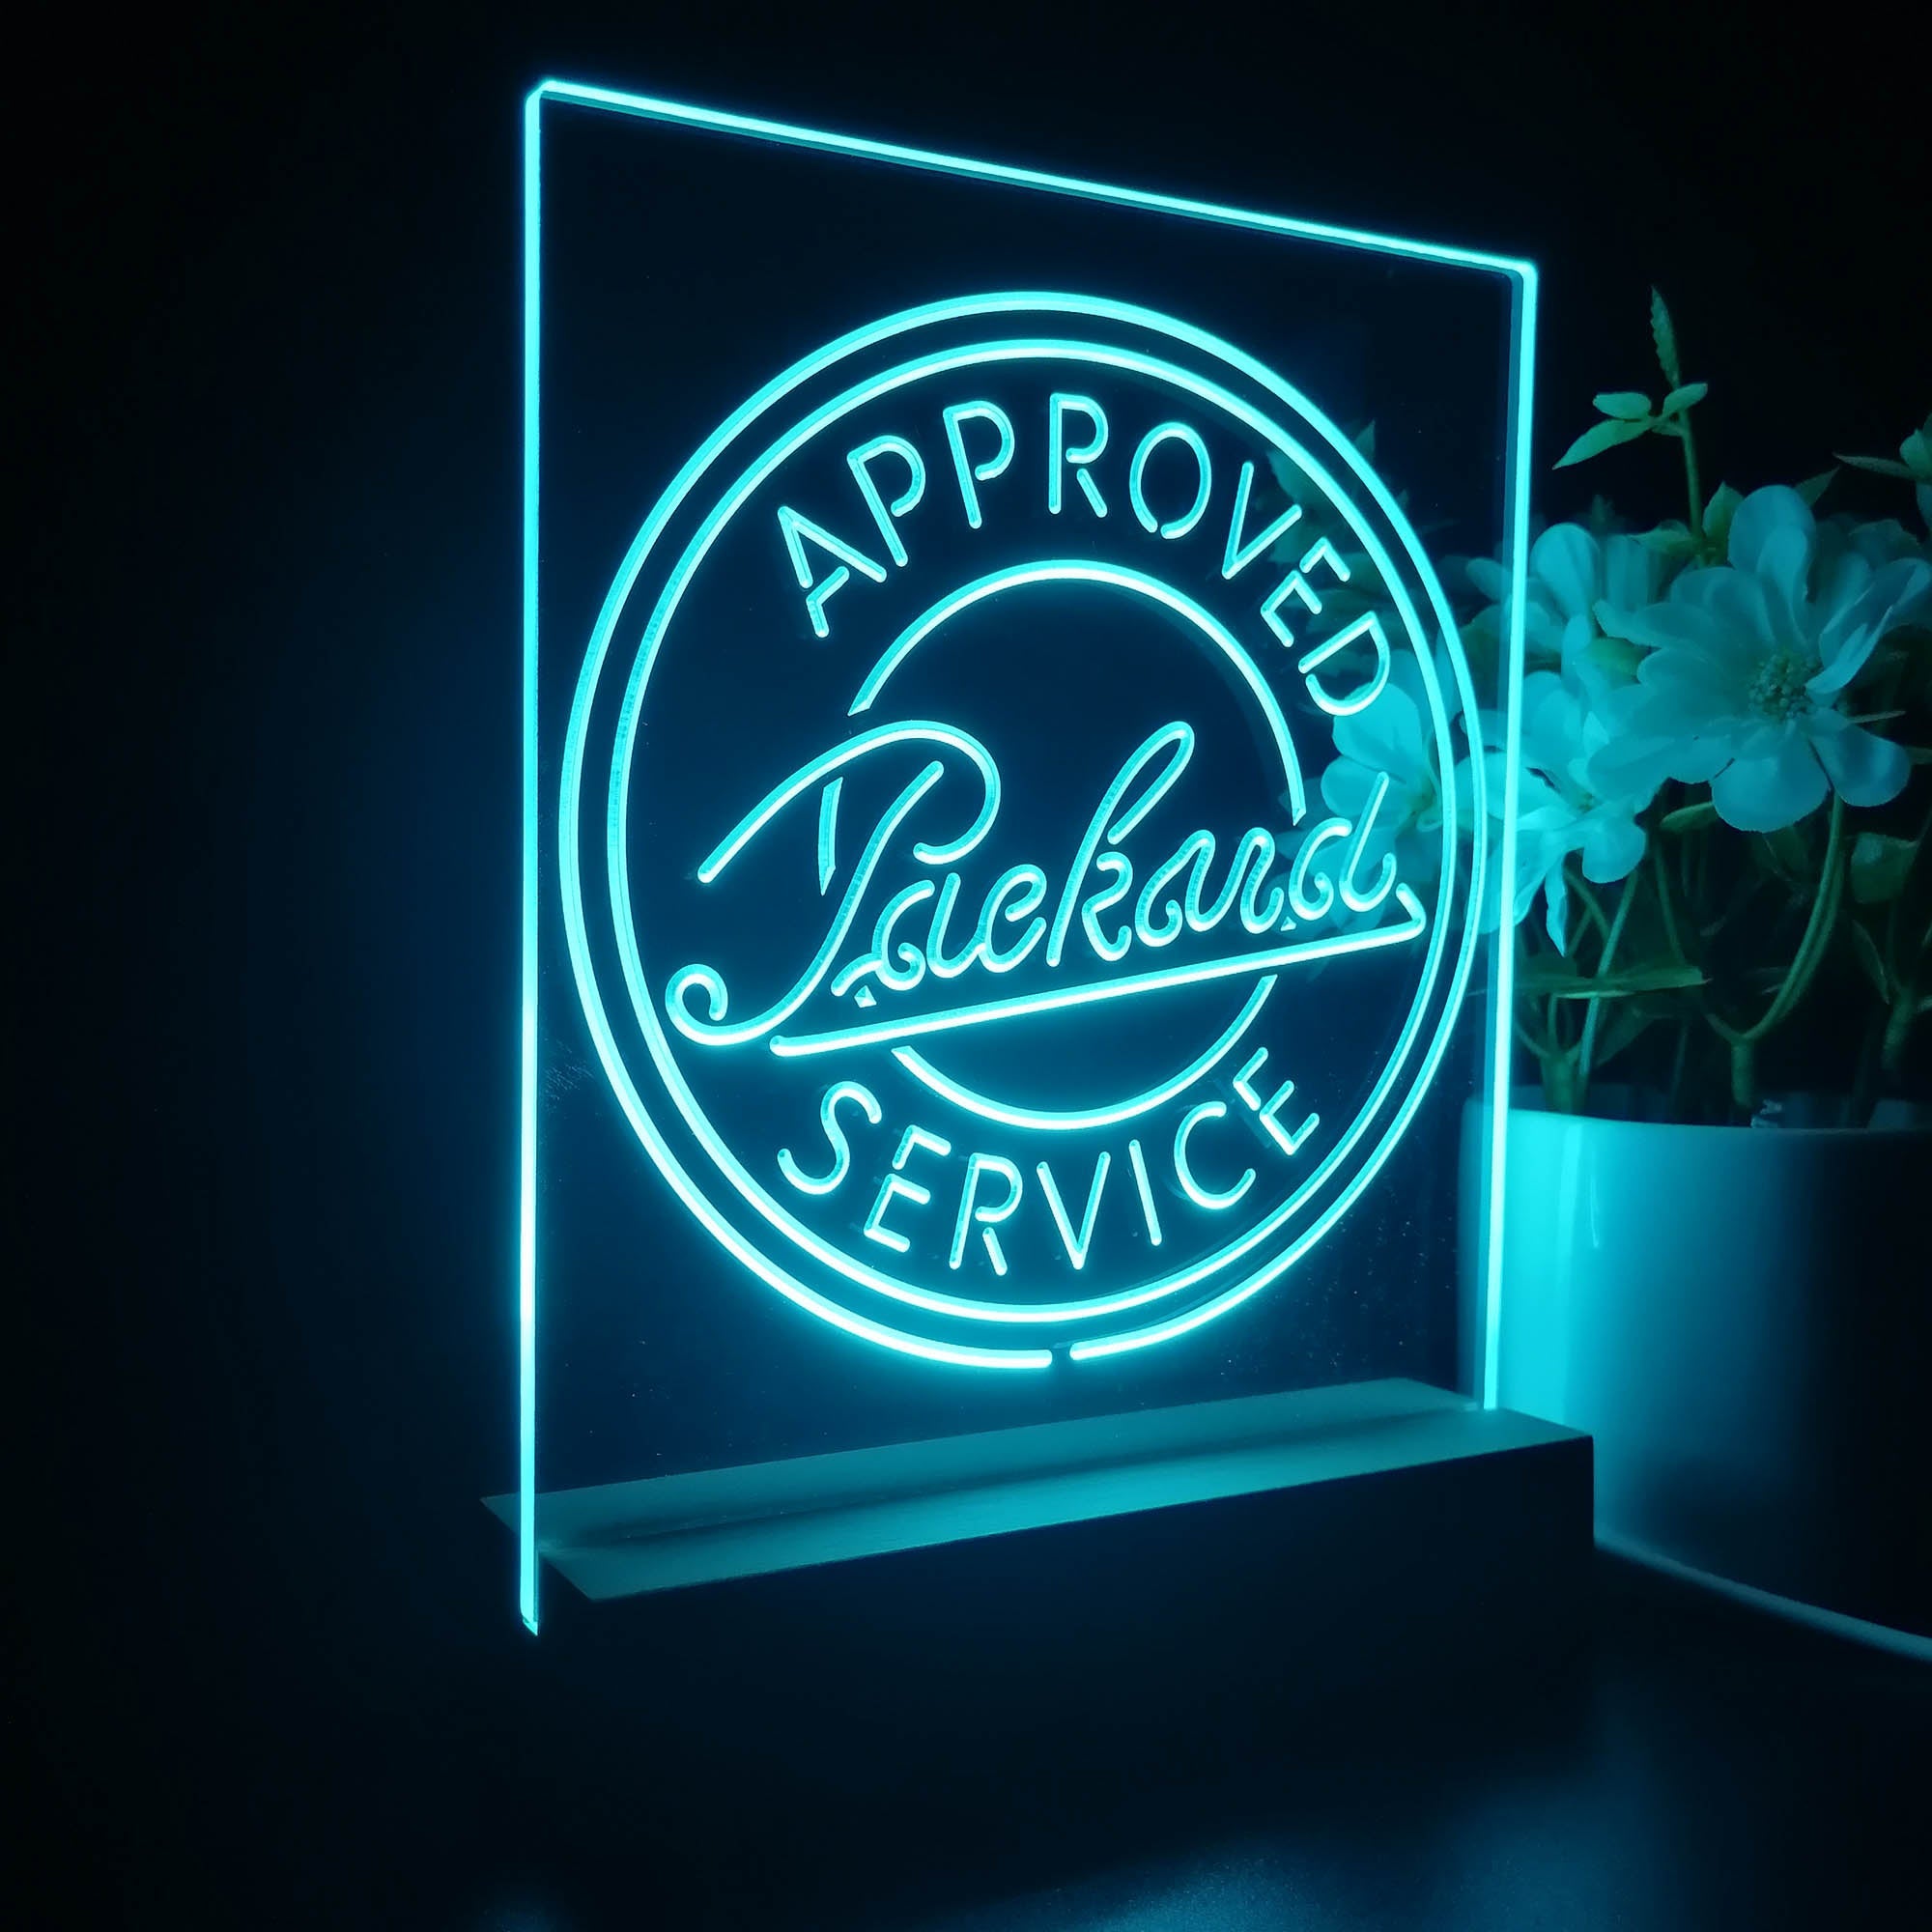 Approved Packard Service Garage 3D Night Light Sign Lamp